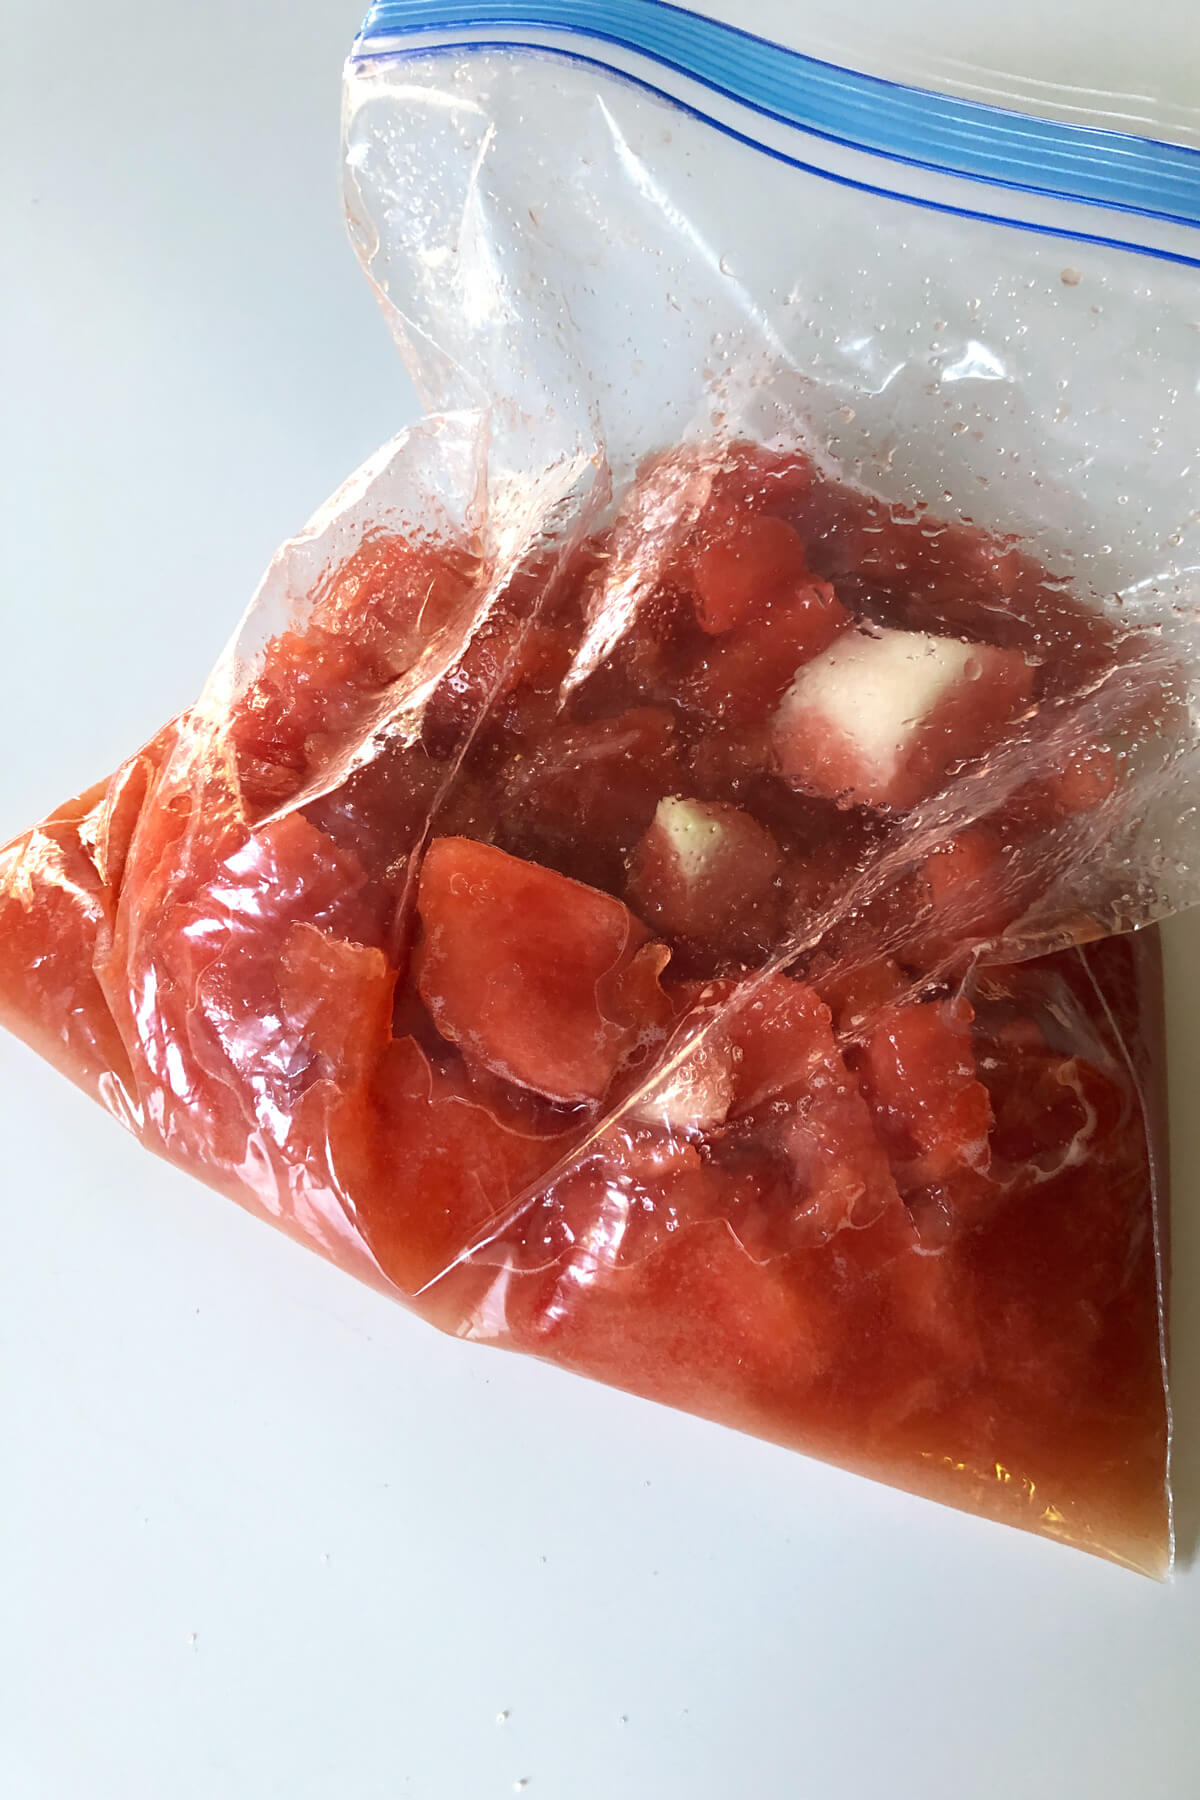 a ziplock freezer bag with watermelon, vegan sugar, and watermelon juice